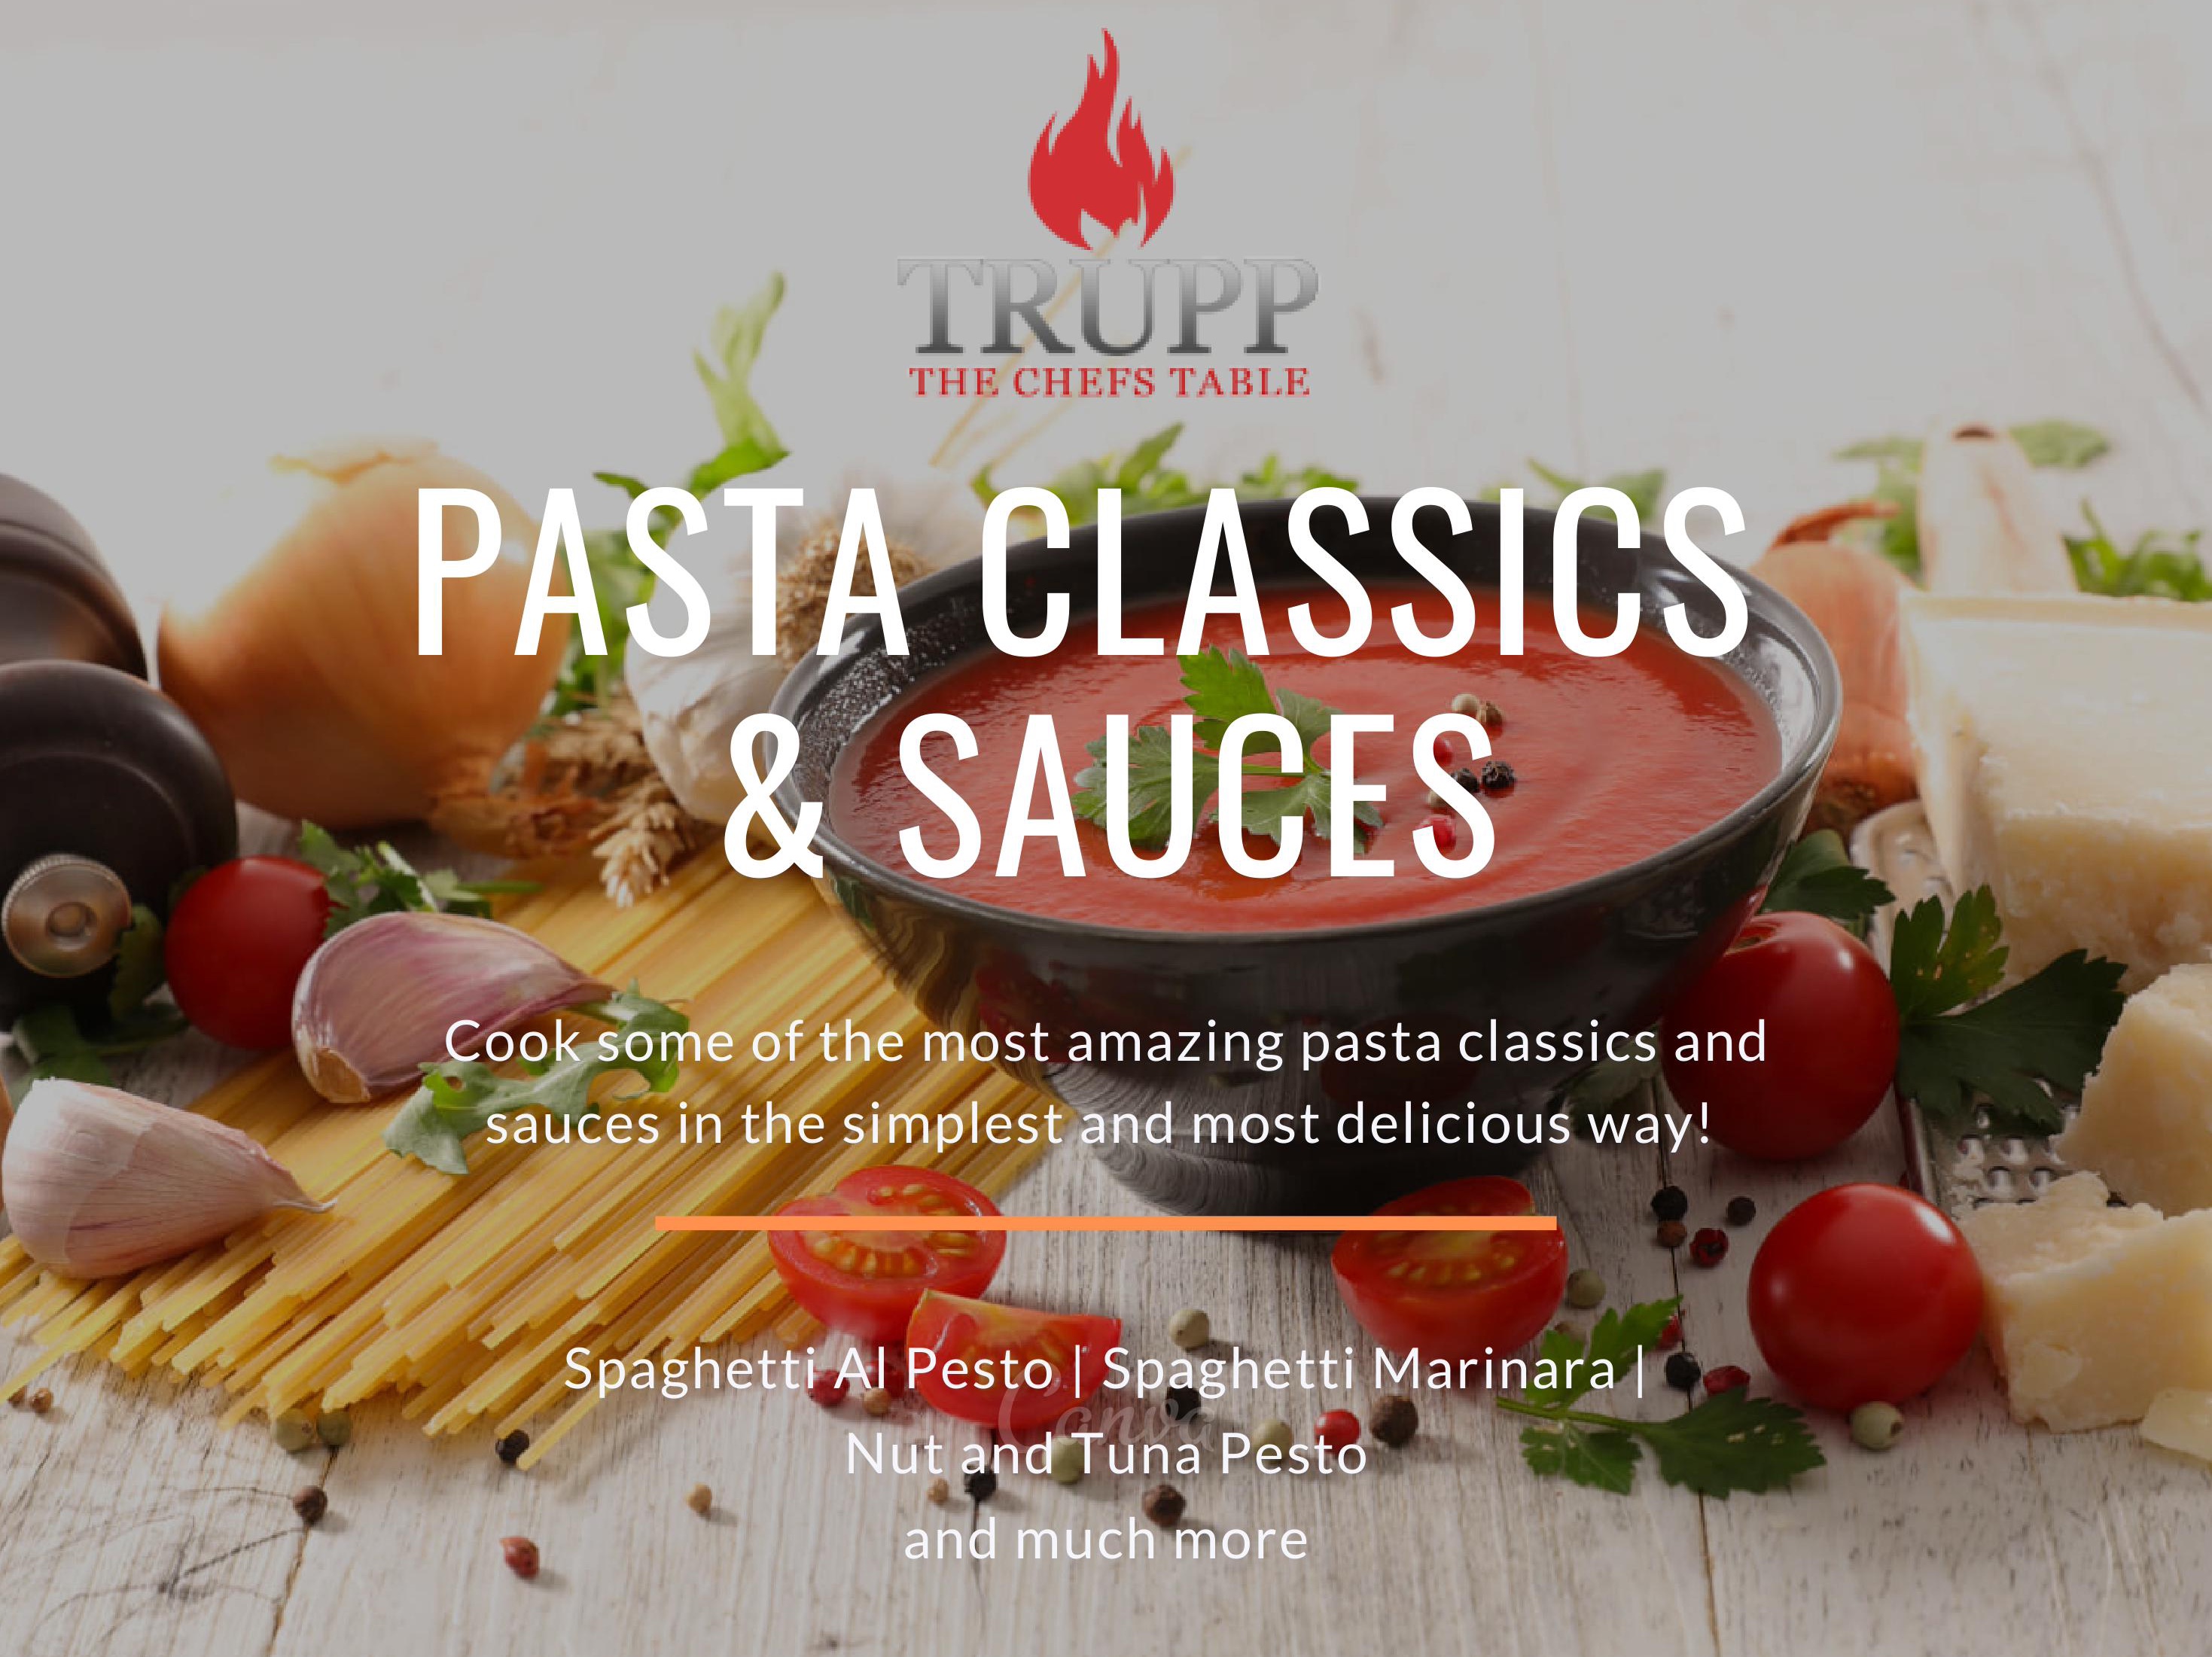 Pasta Classics & Pasta Sauces | Cook with Trupp Online